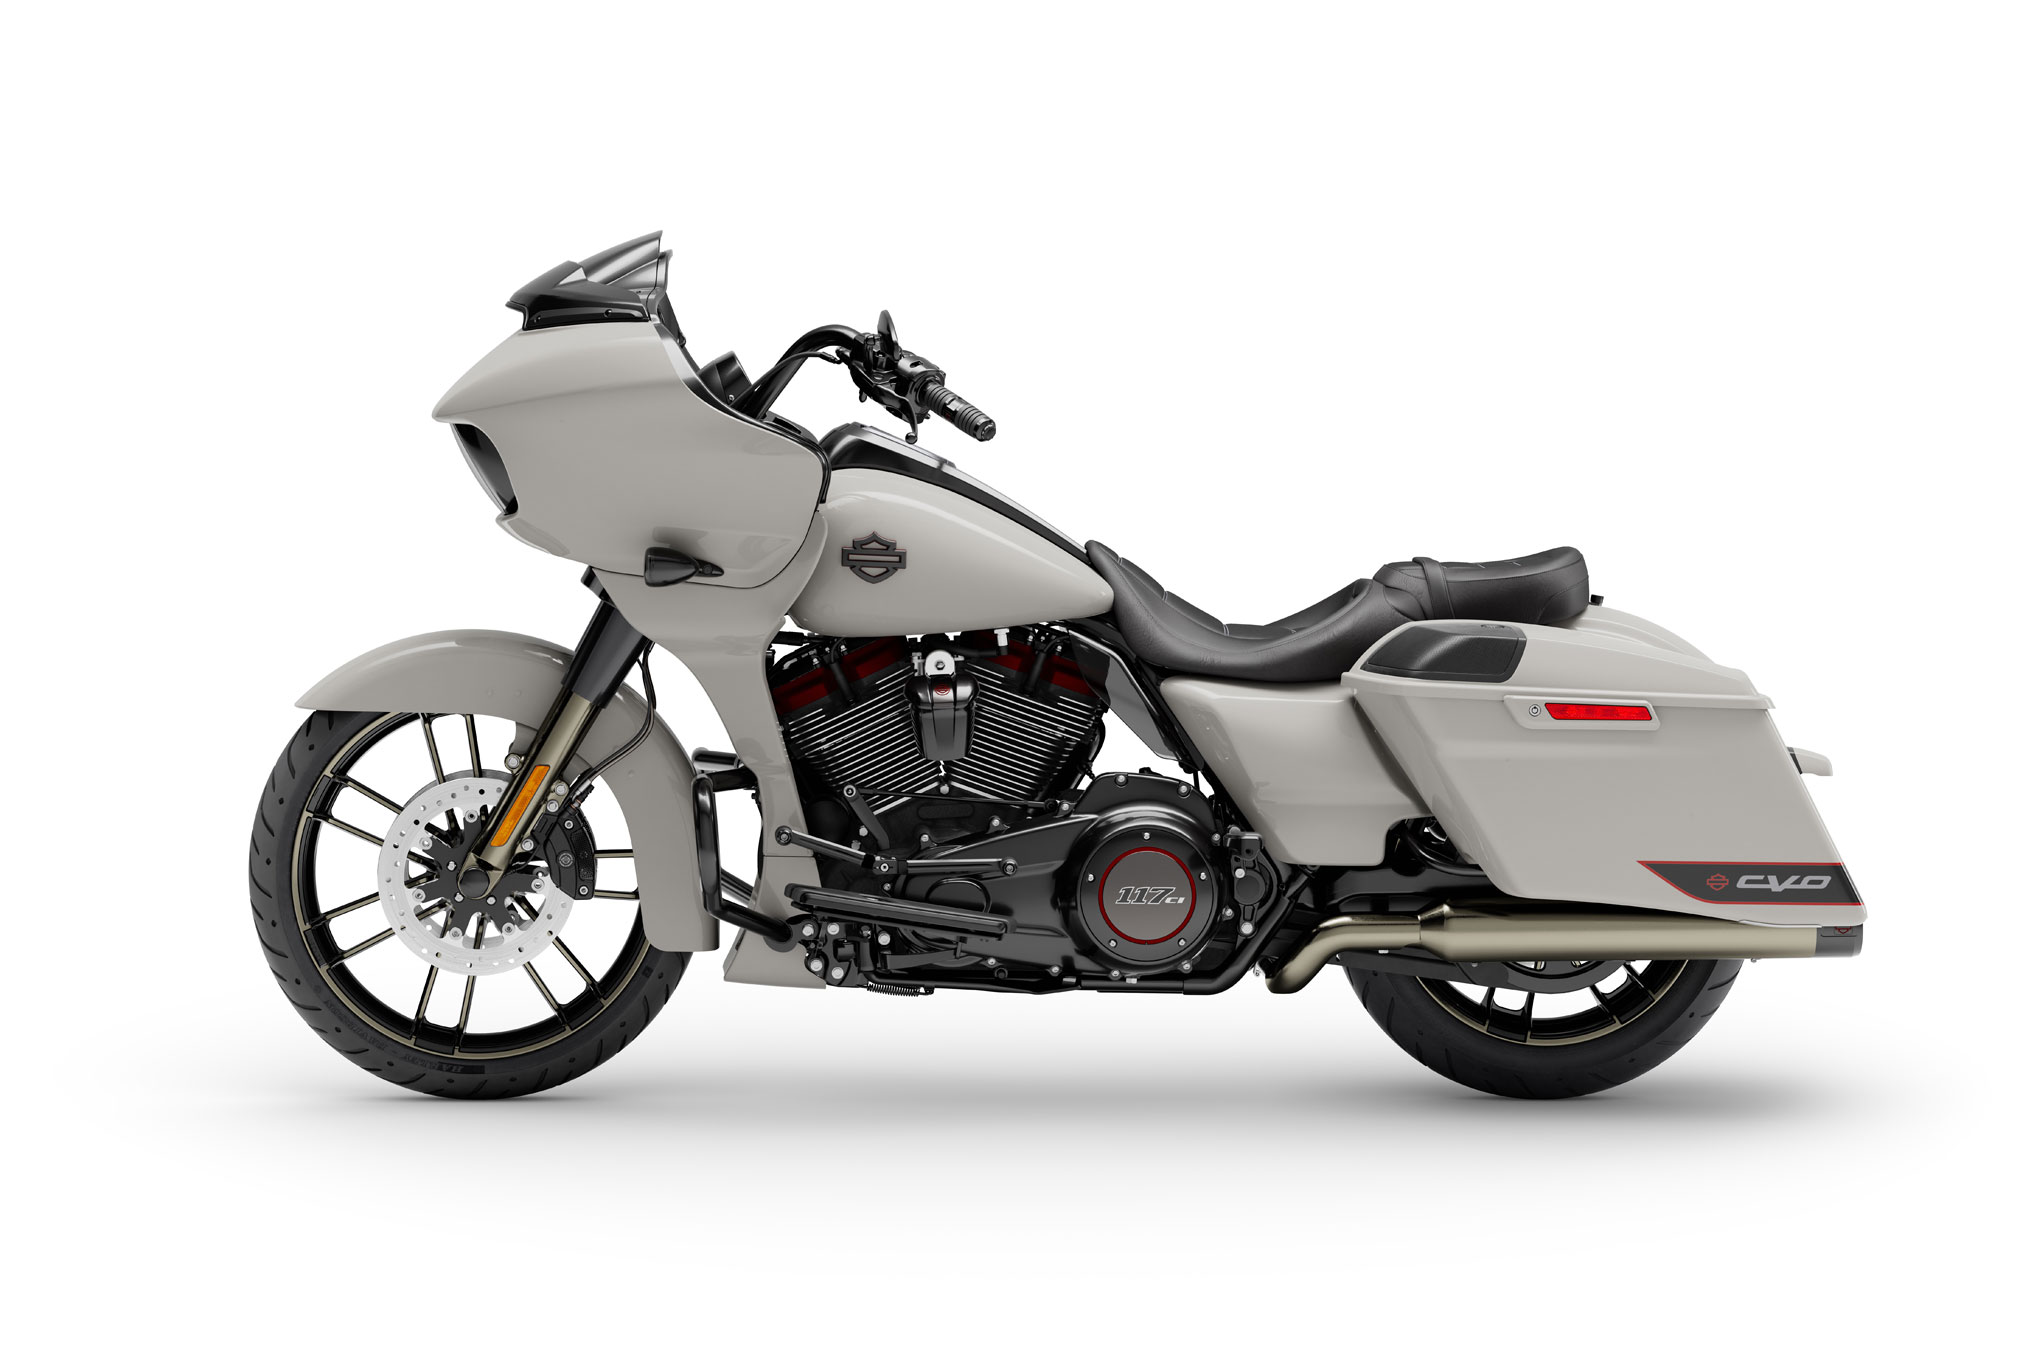 2020 Harley Davidson Cvo Road Glide Guide • Total Motorcycle